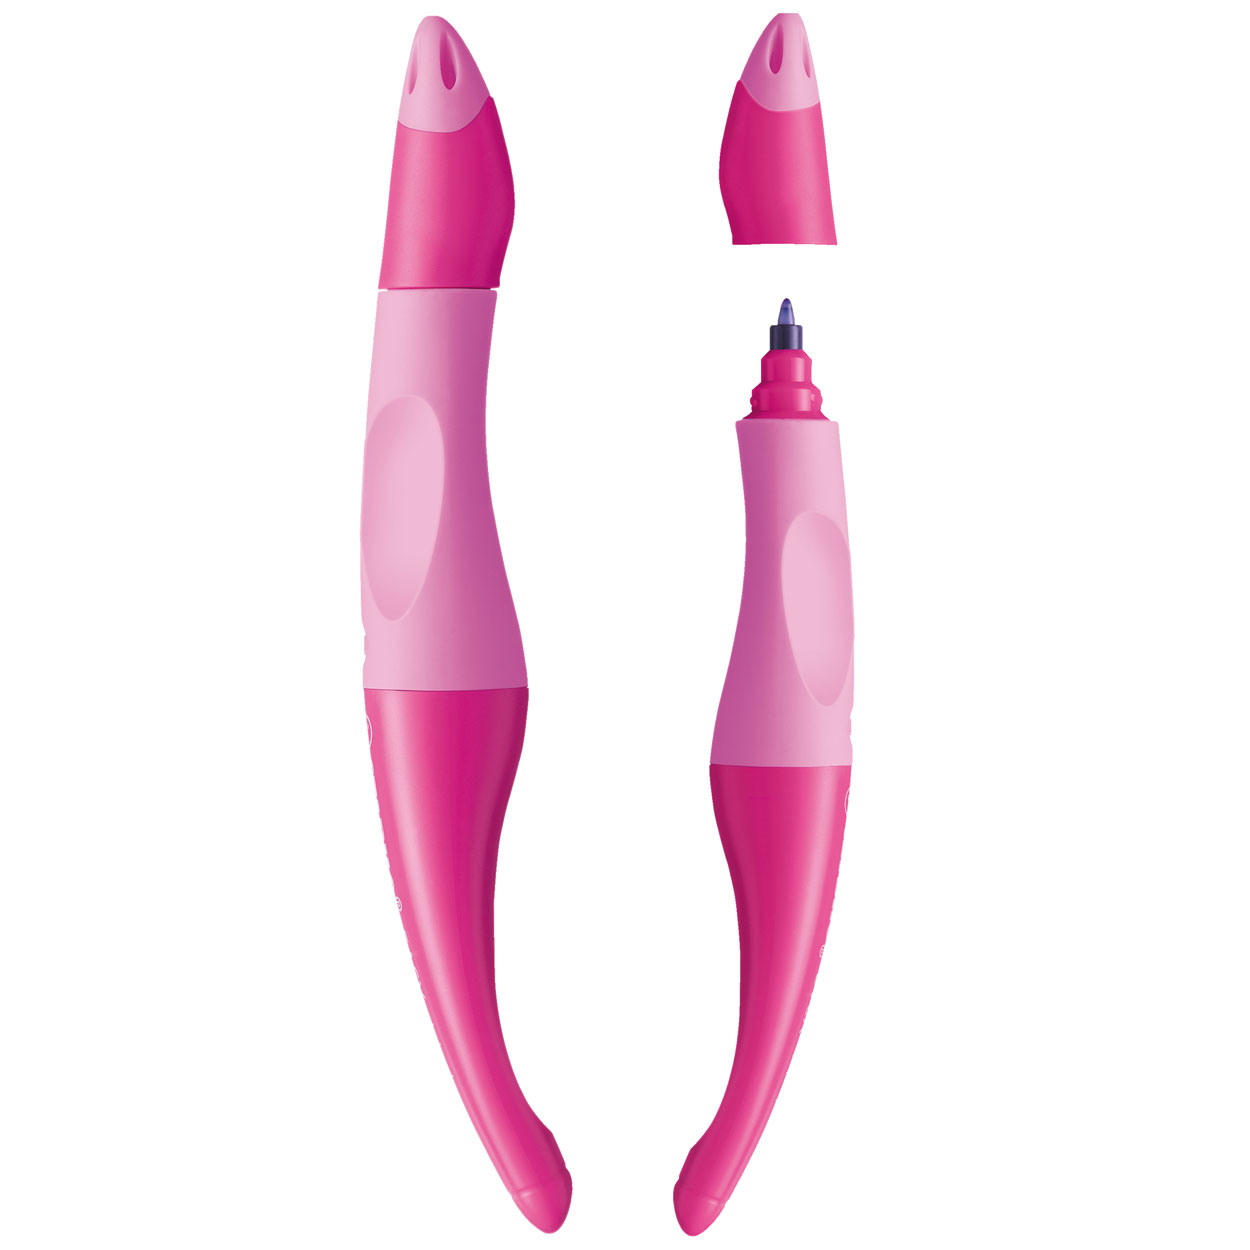 STABILO EASYoriginal – Ergonomischer Tintenroller – Linkshänder – Rosa